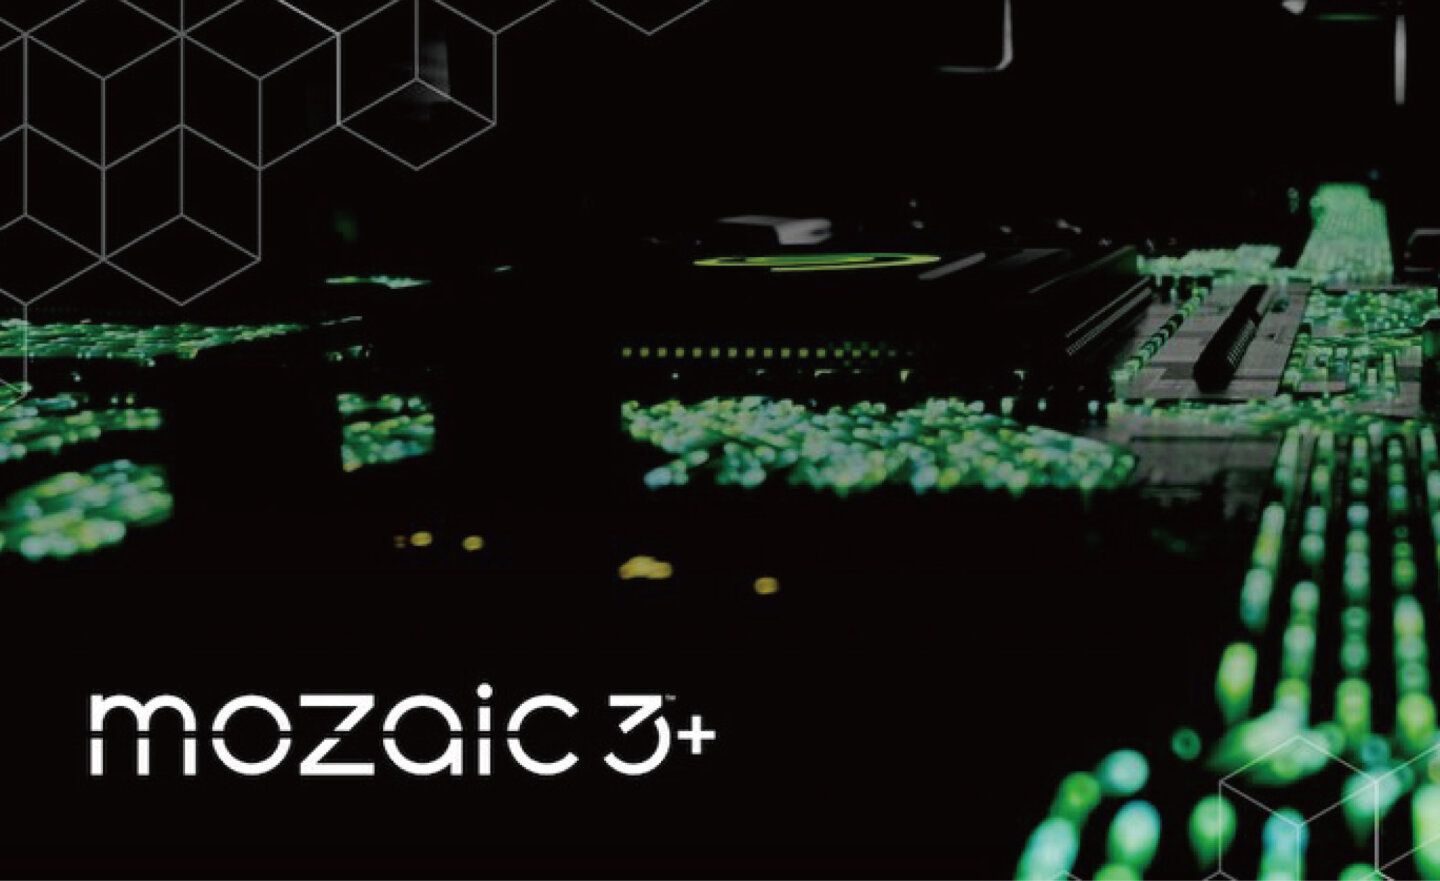 Seagate 打造 Mozaic 3+ 儲存平台，無畏資料量爆炸式增長